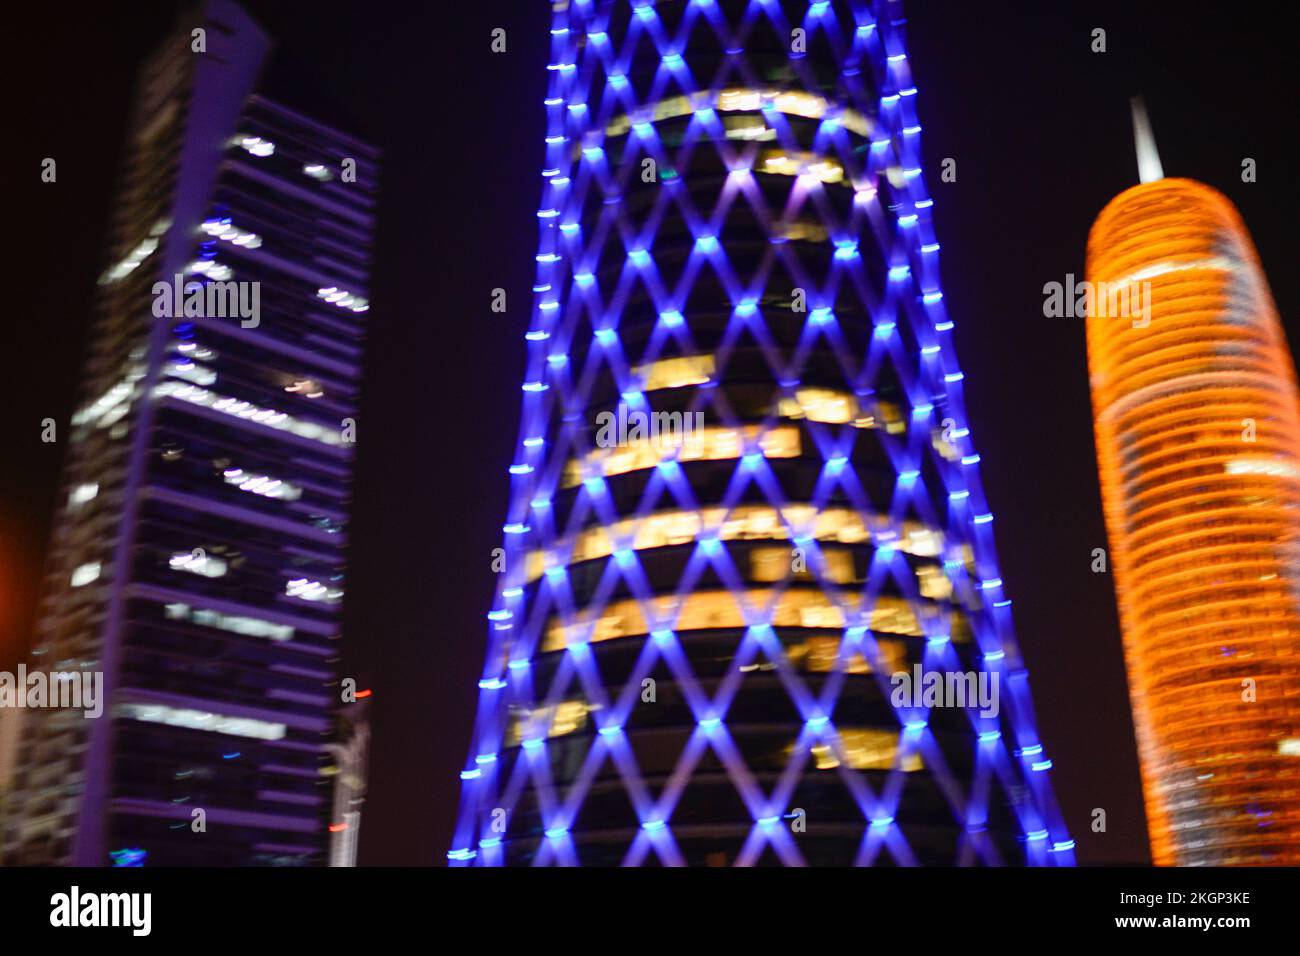 QATAR, Doha, gratte-ciel de la baie est, flou / KATAR, Doha, Wolkenkratzer der Eastbay, verwischt Banque D'Images